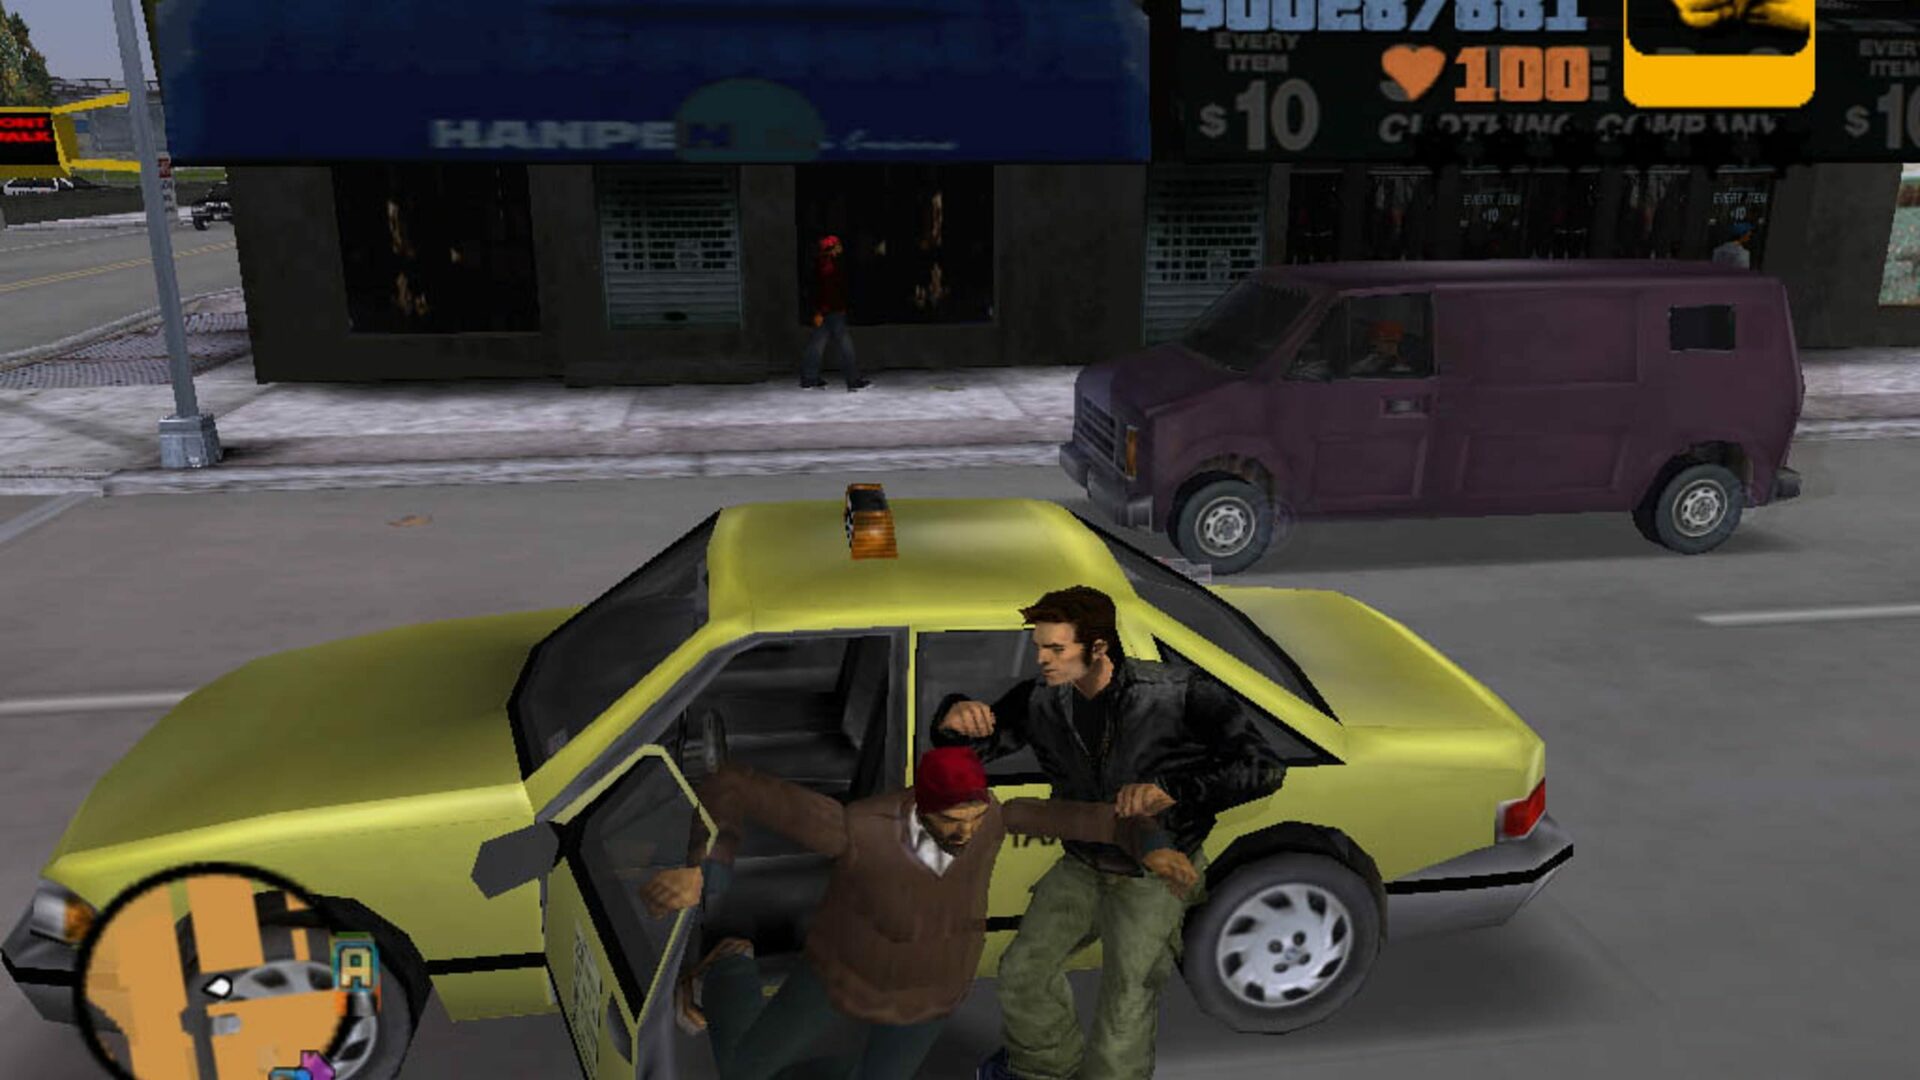 Buy Grand Theft Auto 3 PC Steam key! Cheap price